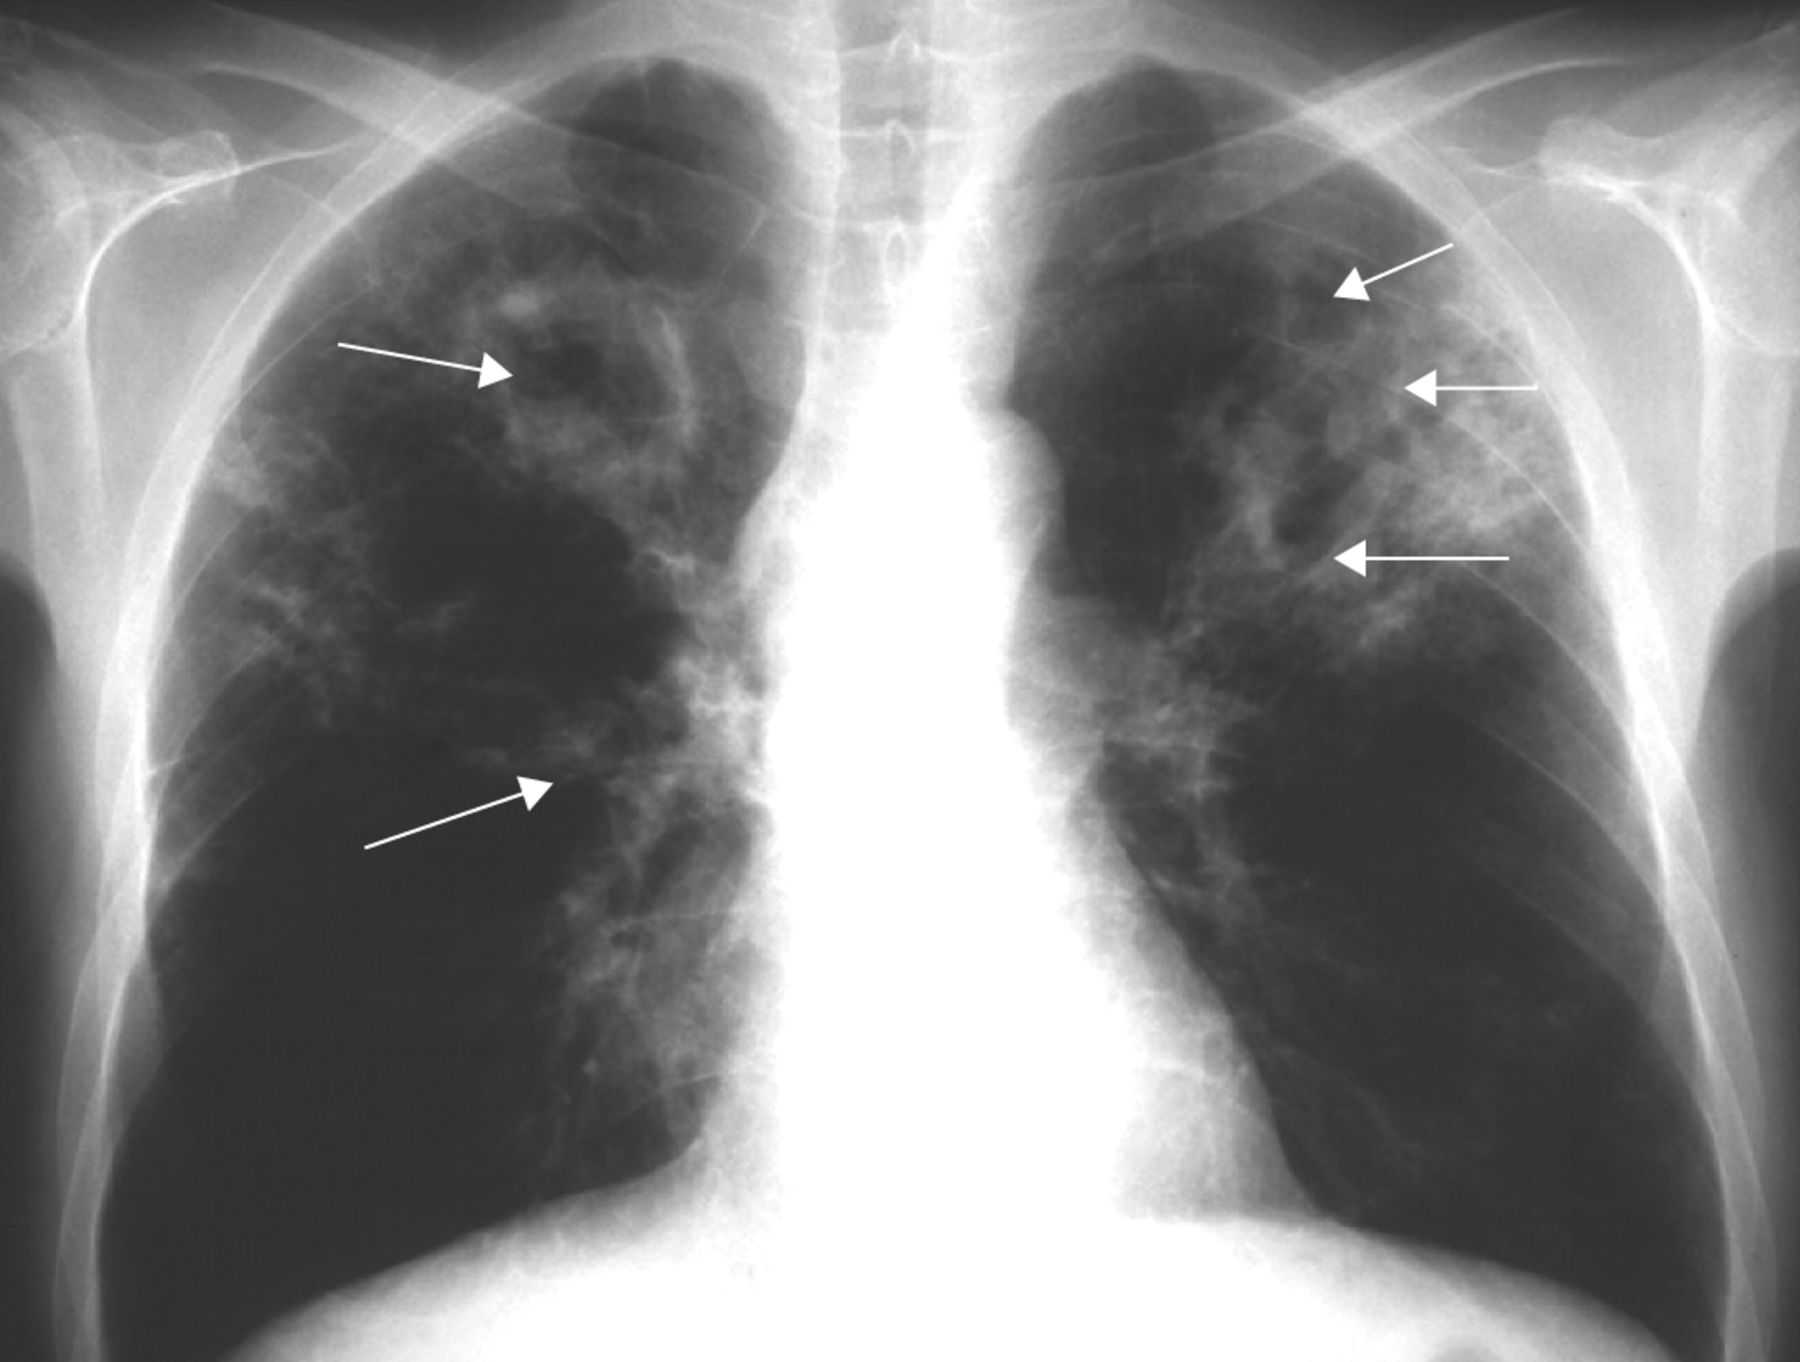 Туберкулез легкого рентгенограмма